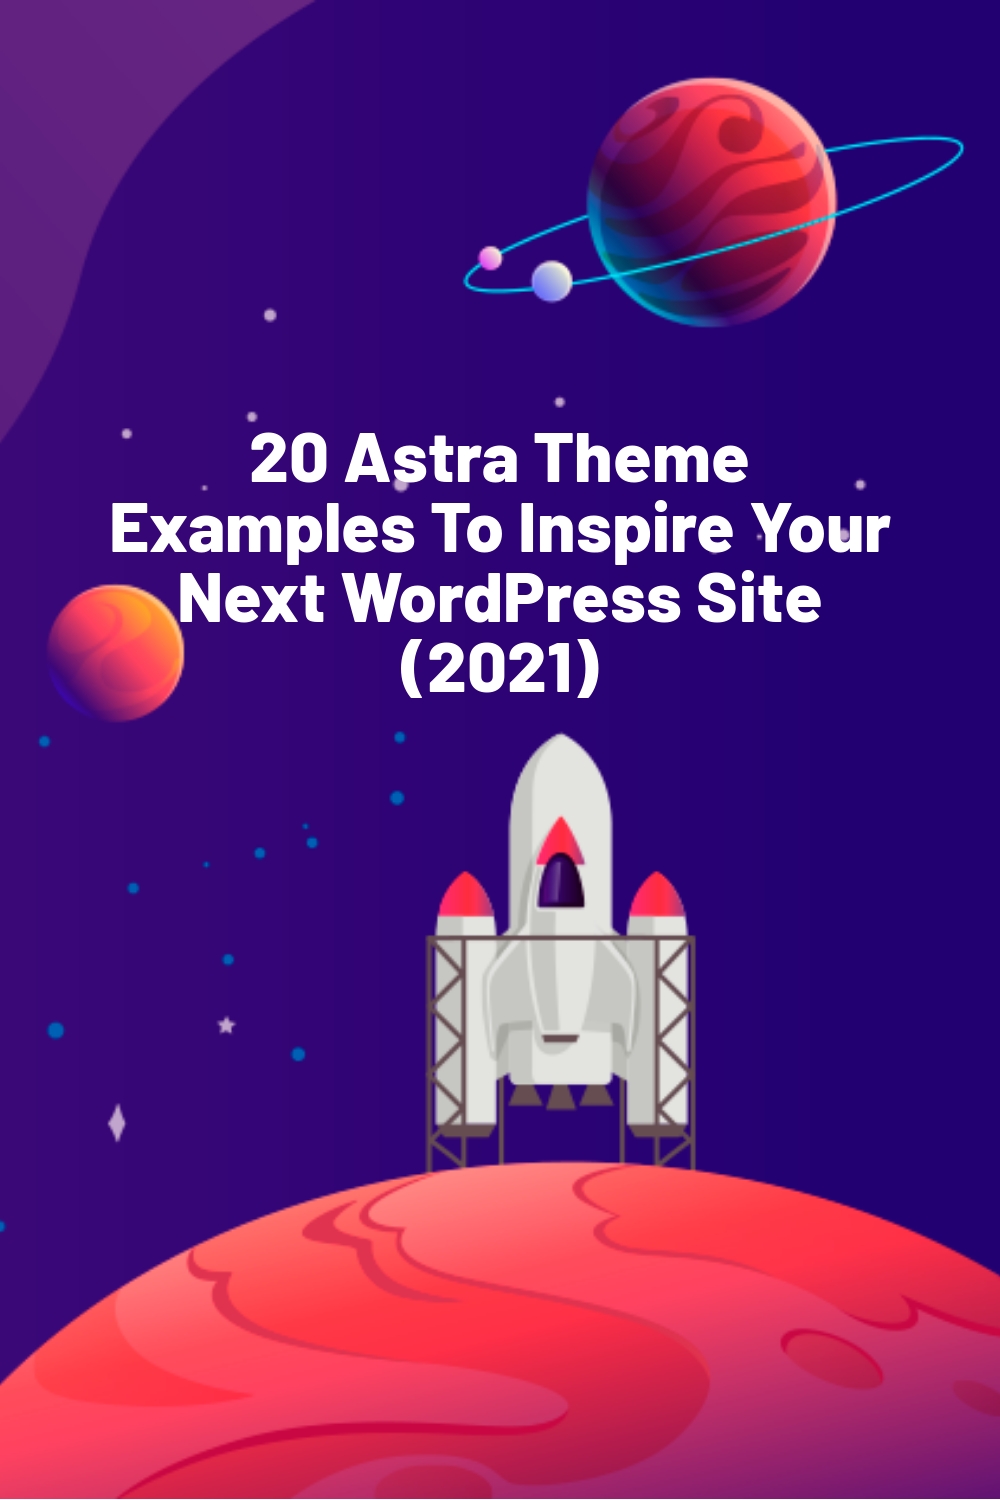 20 Astra Theme Examples To Inspire Your Next WordPress Site (2021)